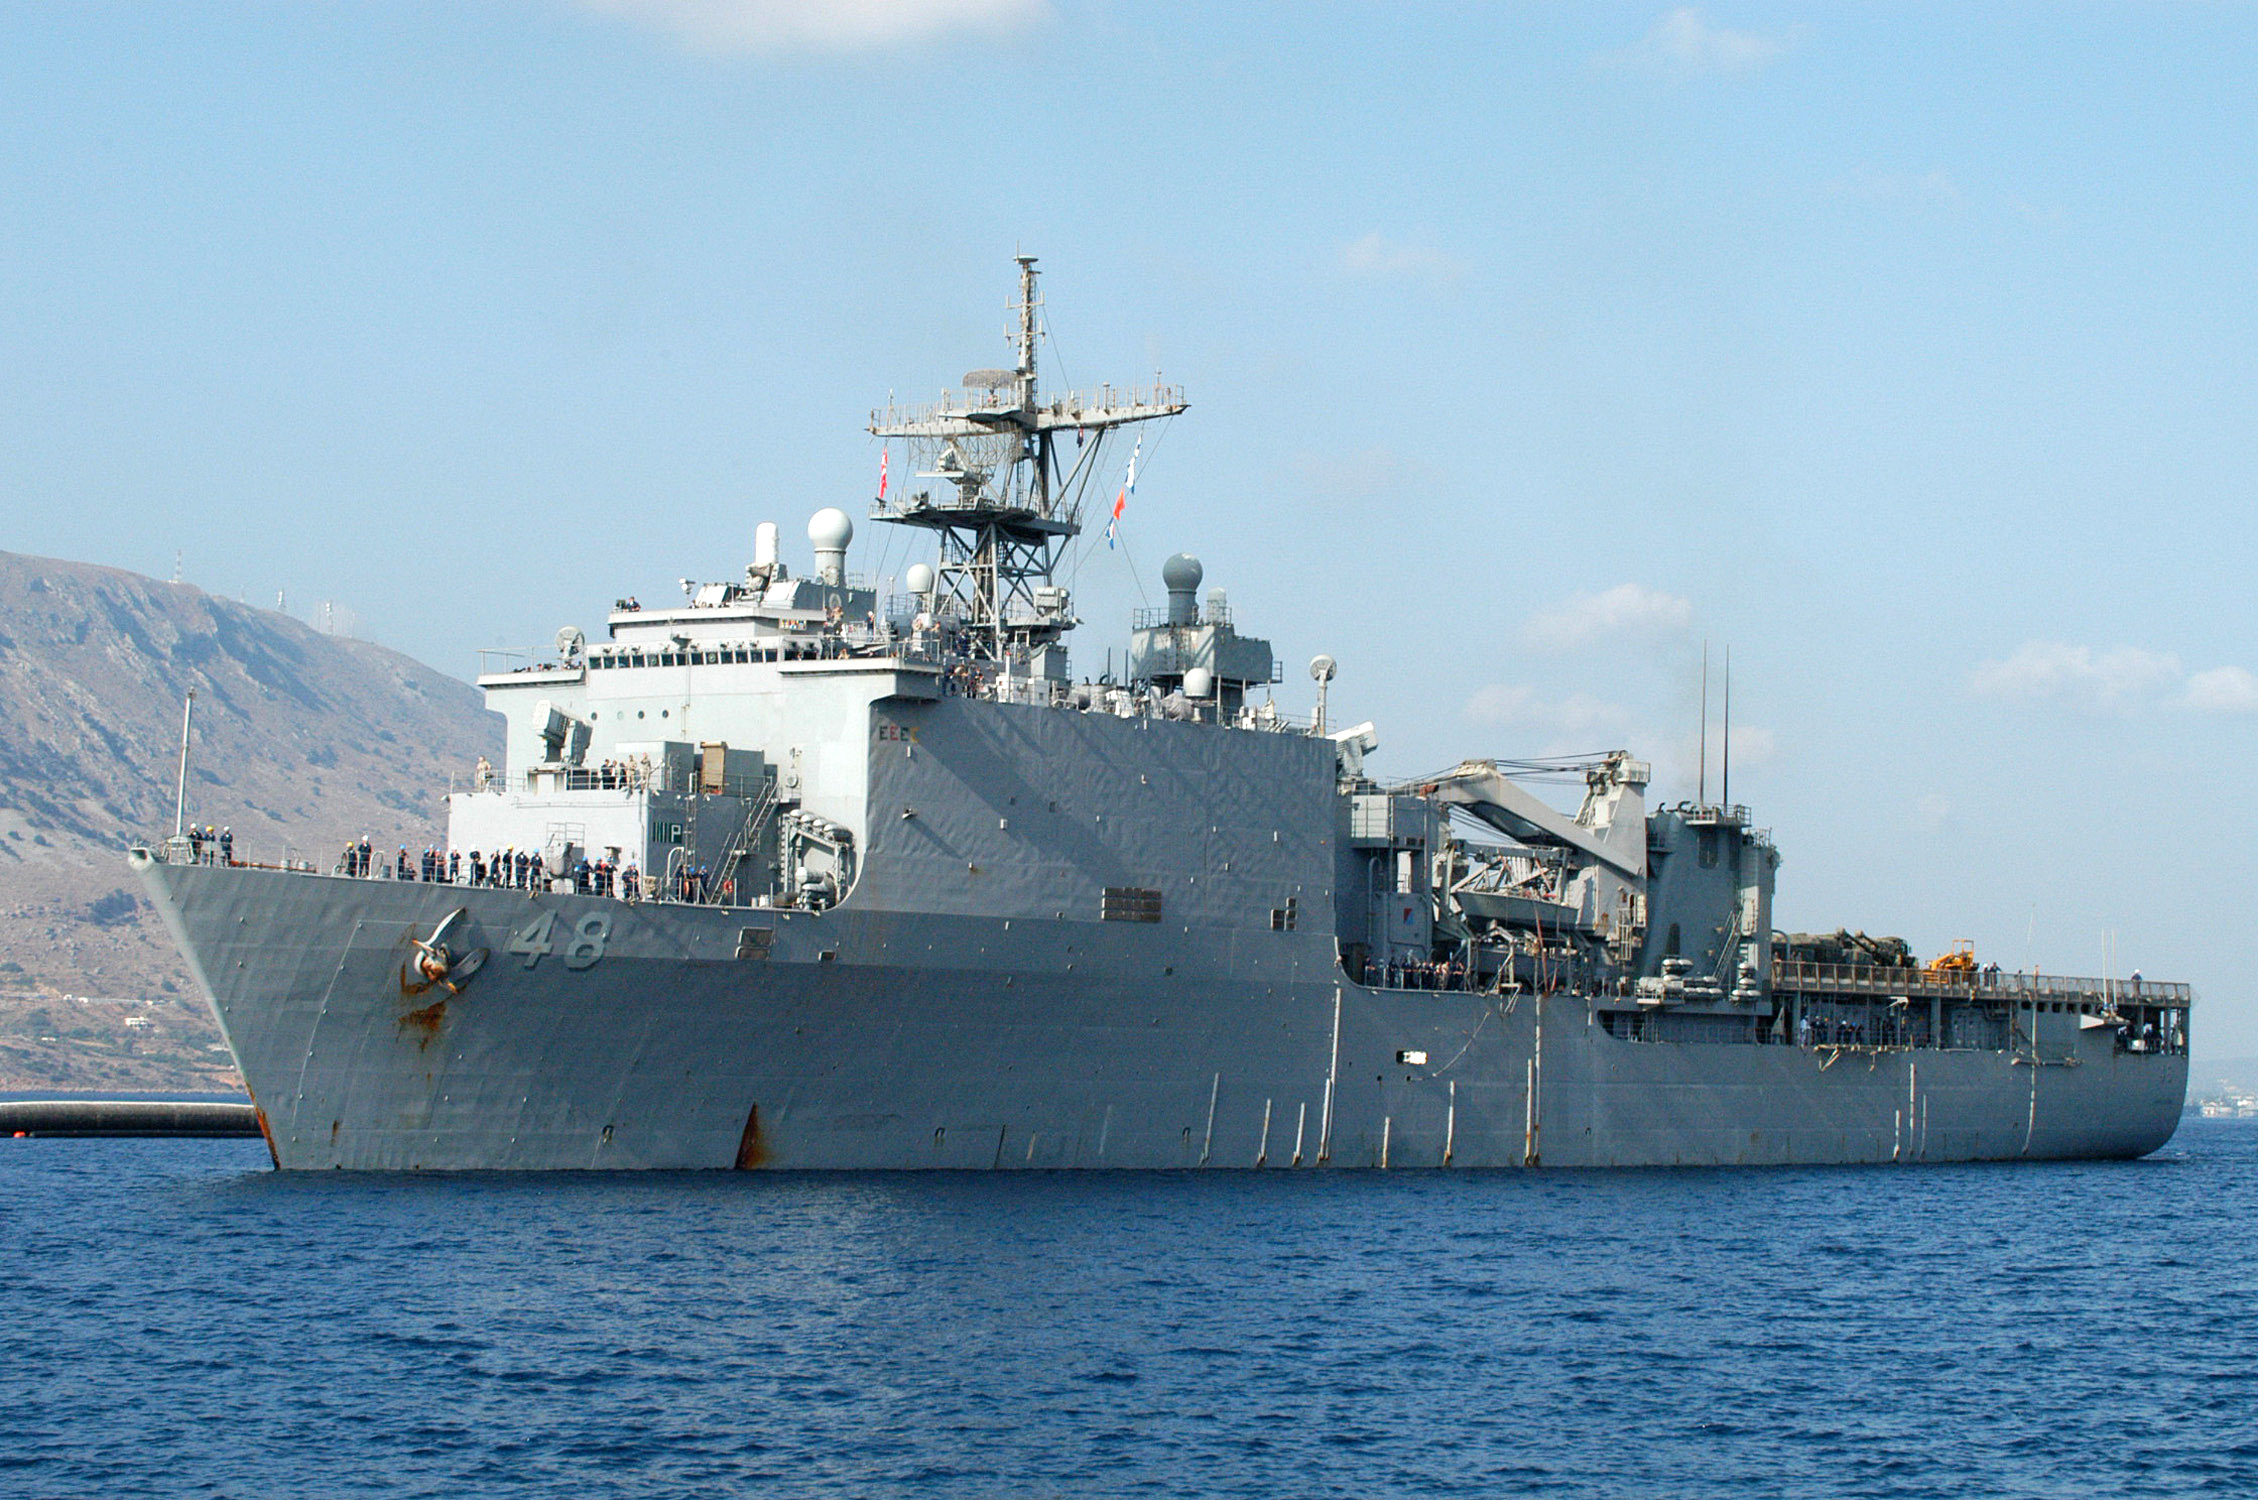 United States Navy ships Wikipedia the free encyclopedia